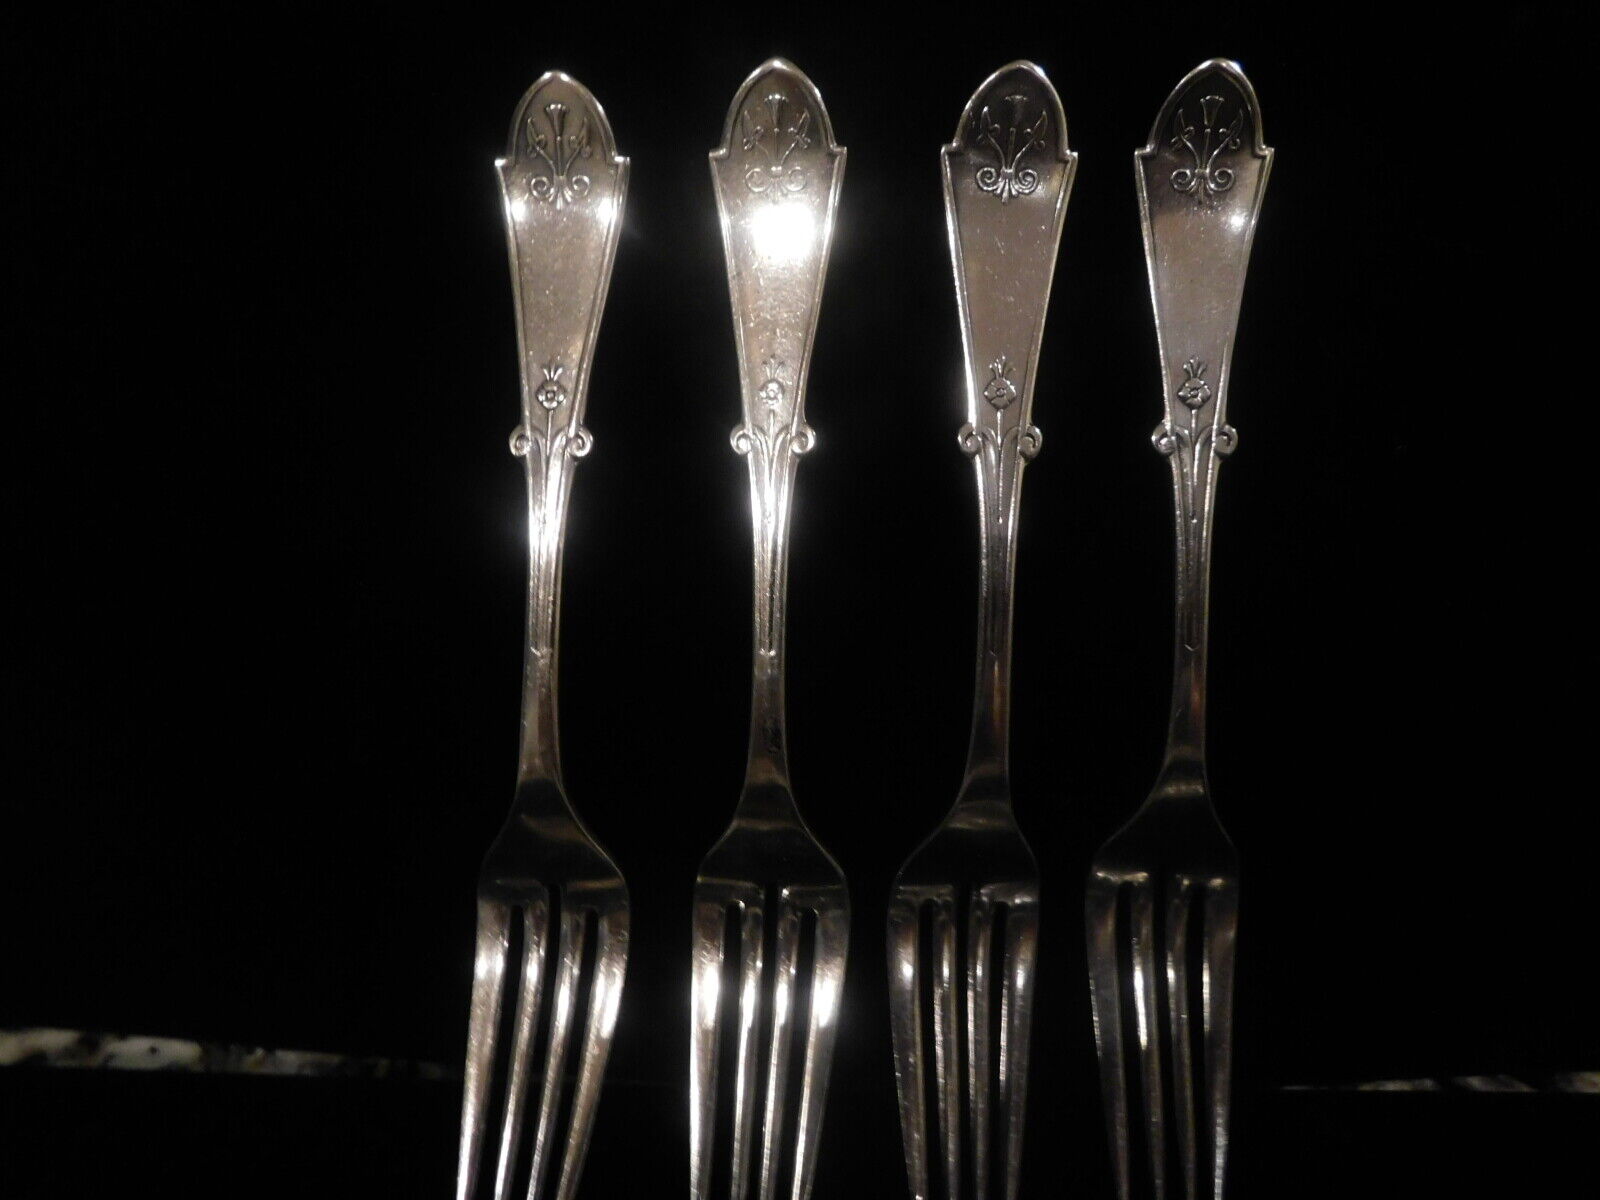 Exquisite 12 Vintage Reed & Barton Decorative Designed Silverplate Forks 1889